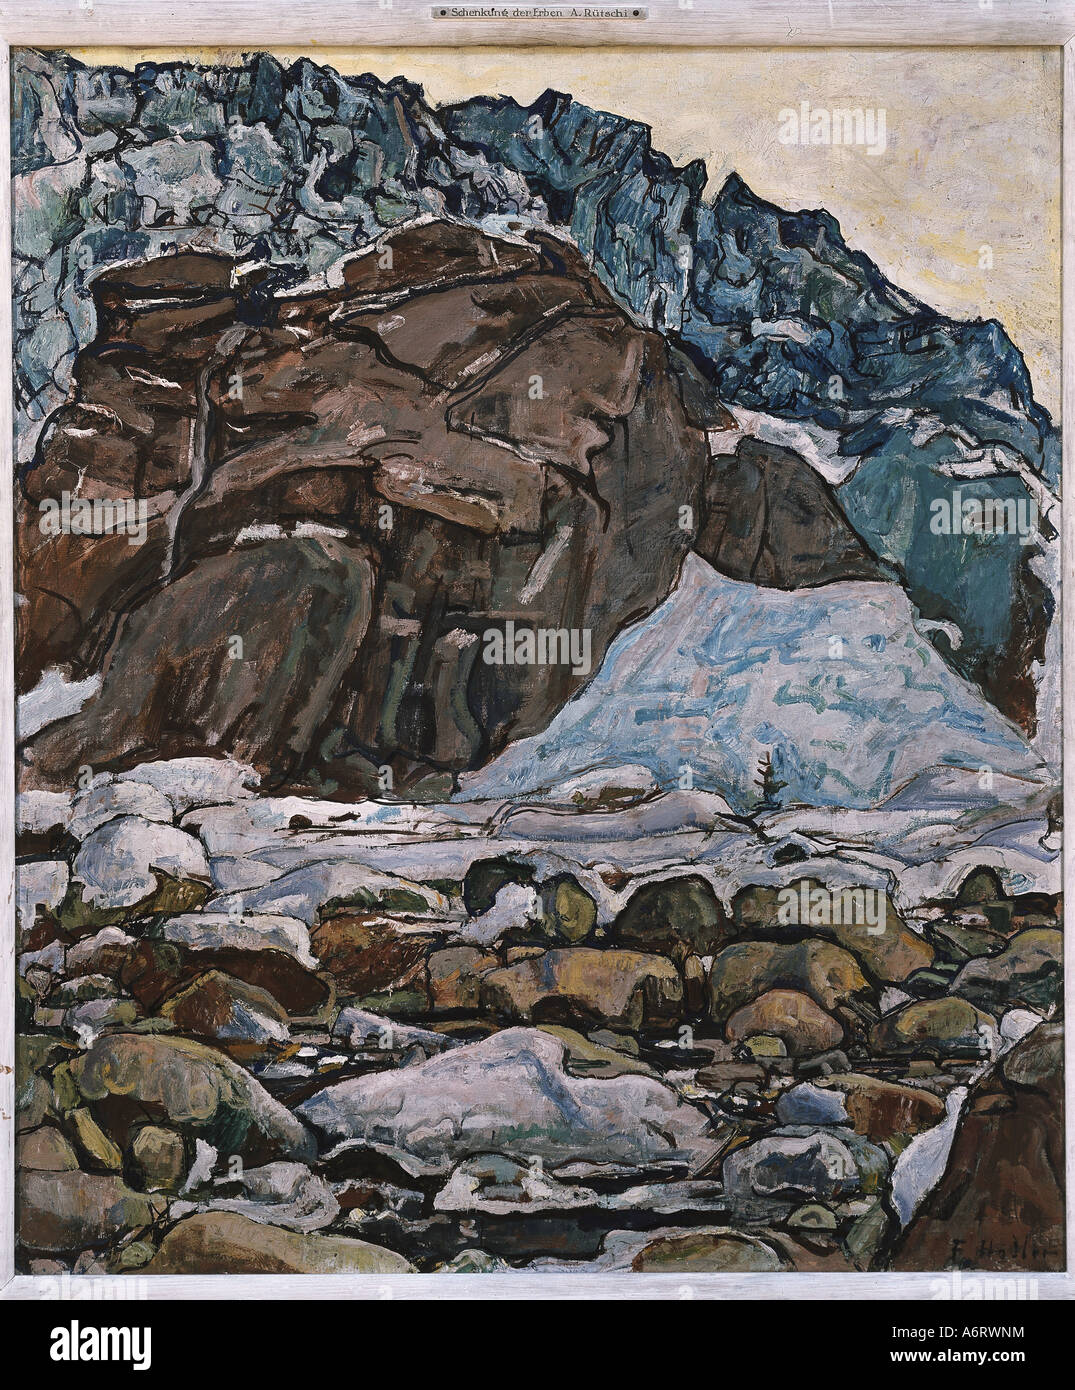 Hodler, Ferdinand (1853 - 1918), Grindelwald glacier, painting, 1911, oil on canvas, 93x80 cm, Kunsthaus Zurich, Swiss painting, Stock Photo